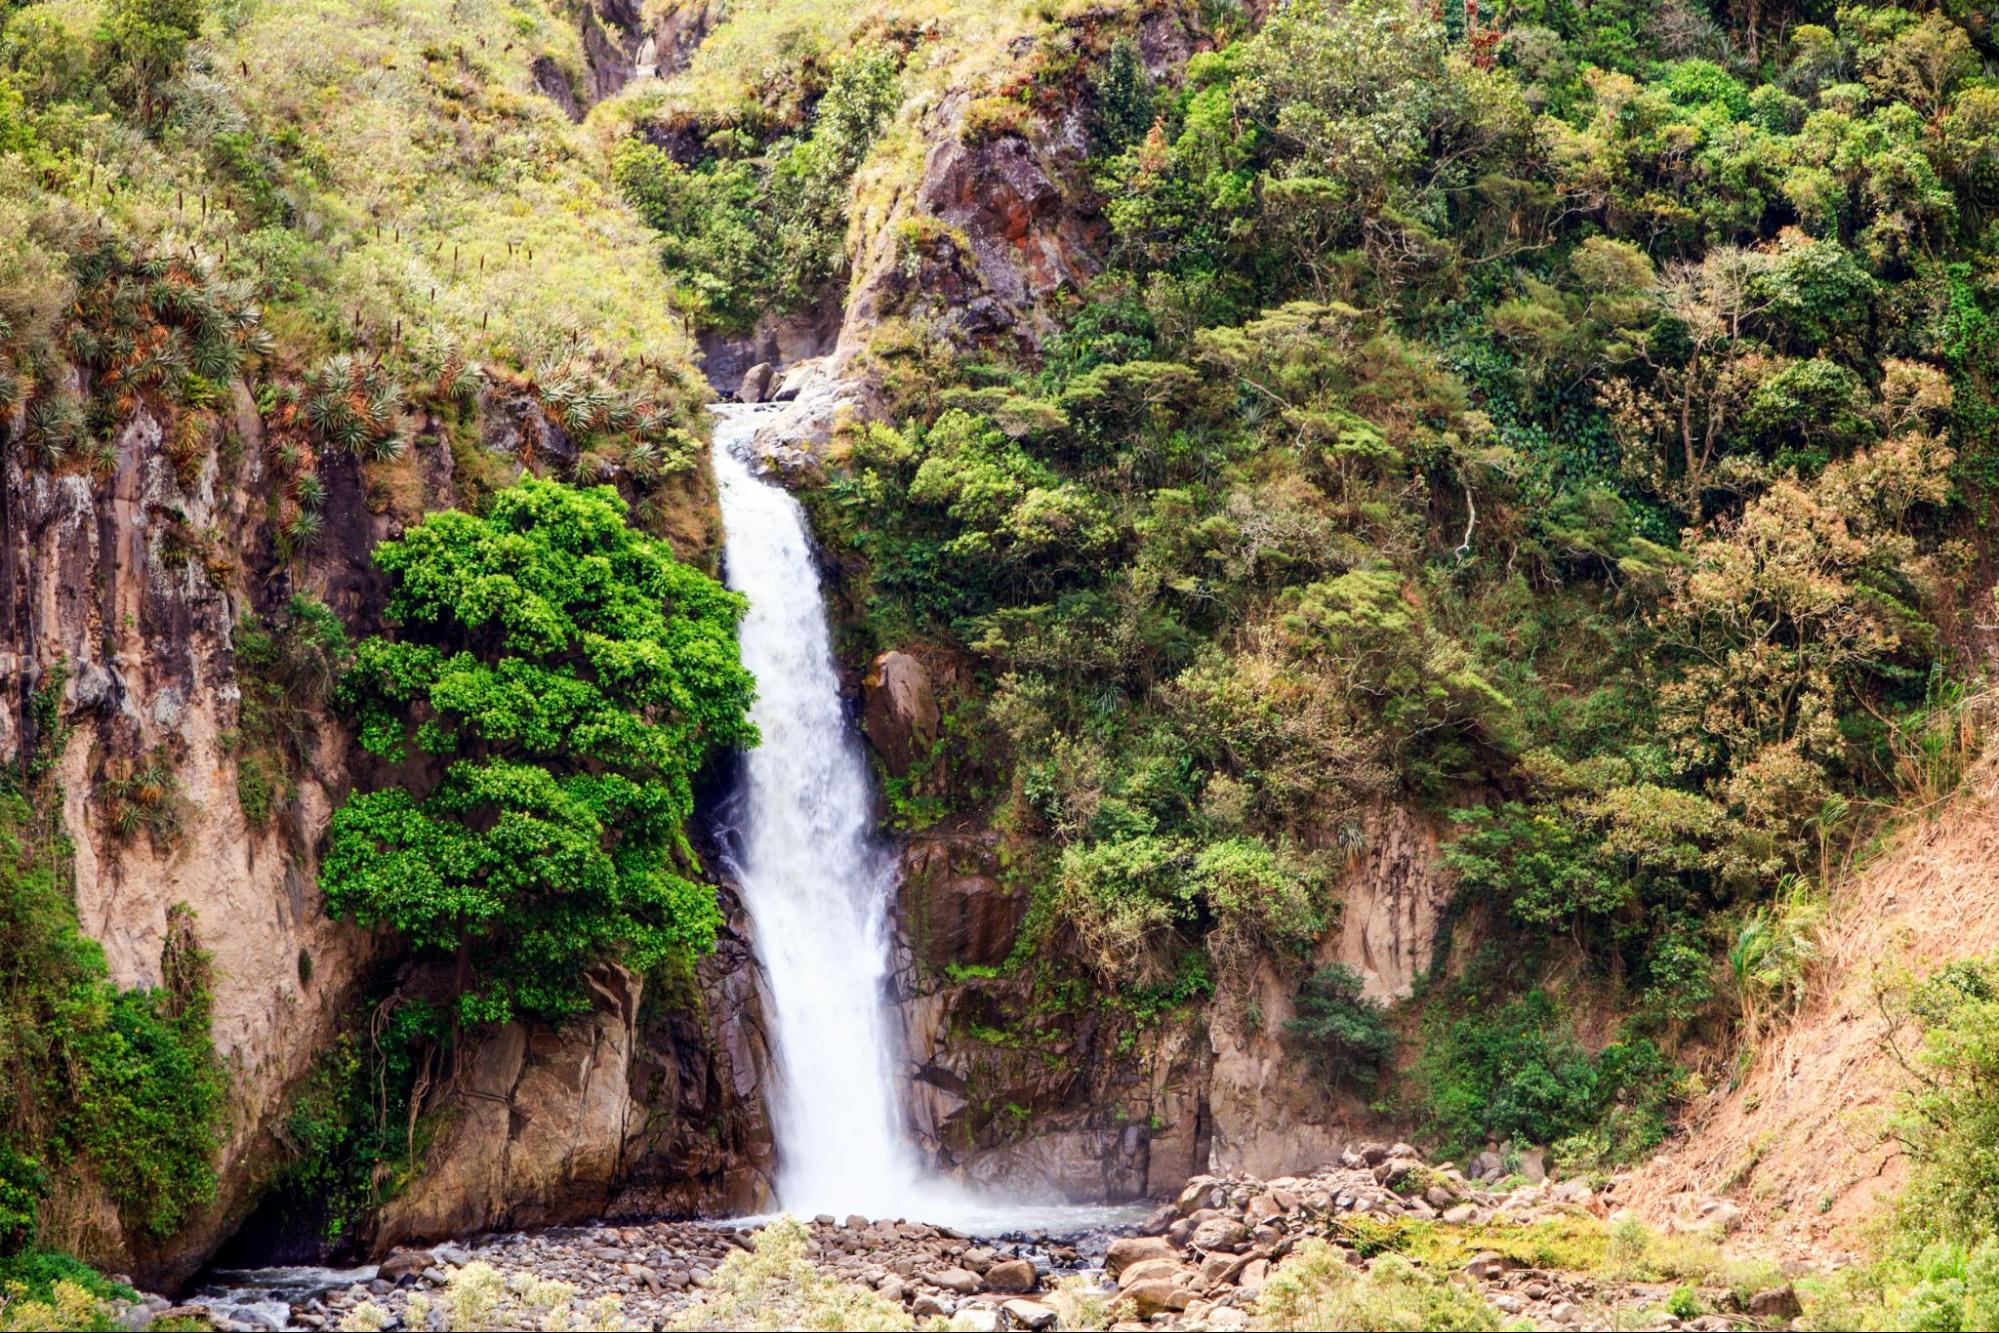 30M High Waterfall Near Banos Ecuador Offer Perfect Bath Place And Rock Climbing 